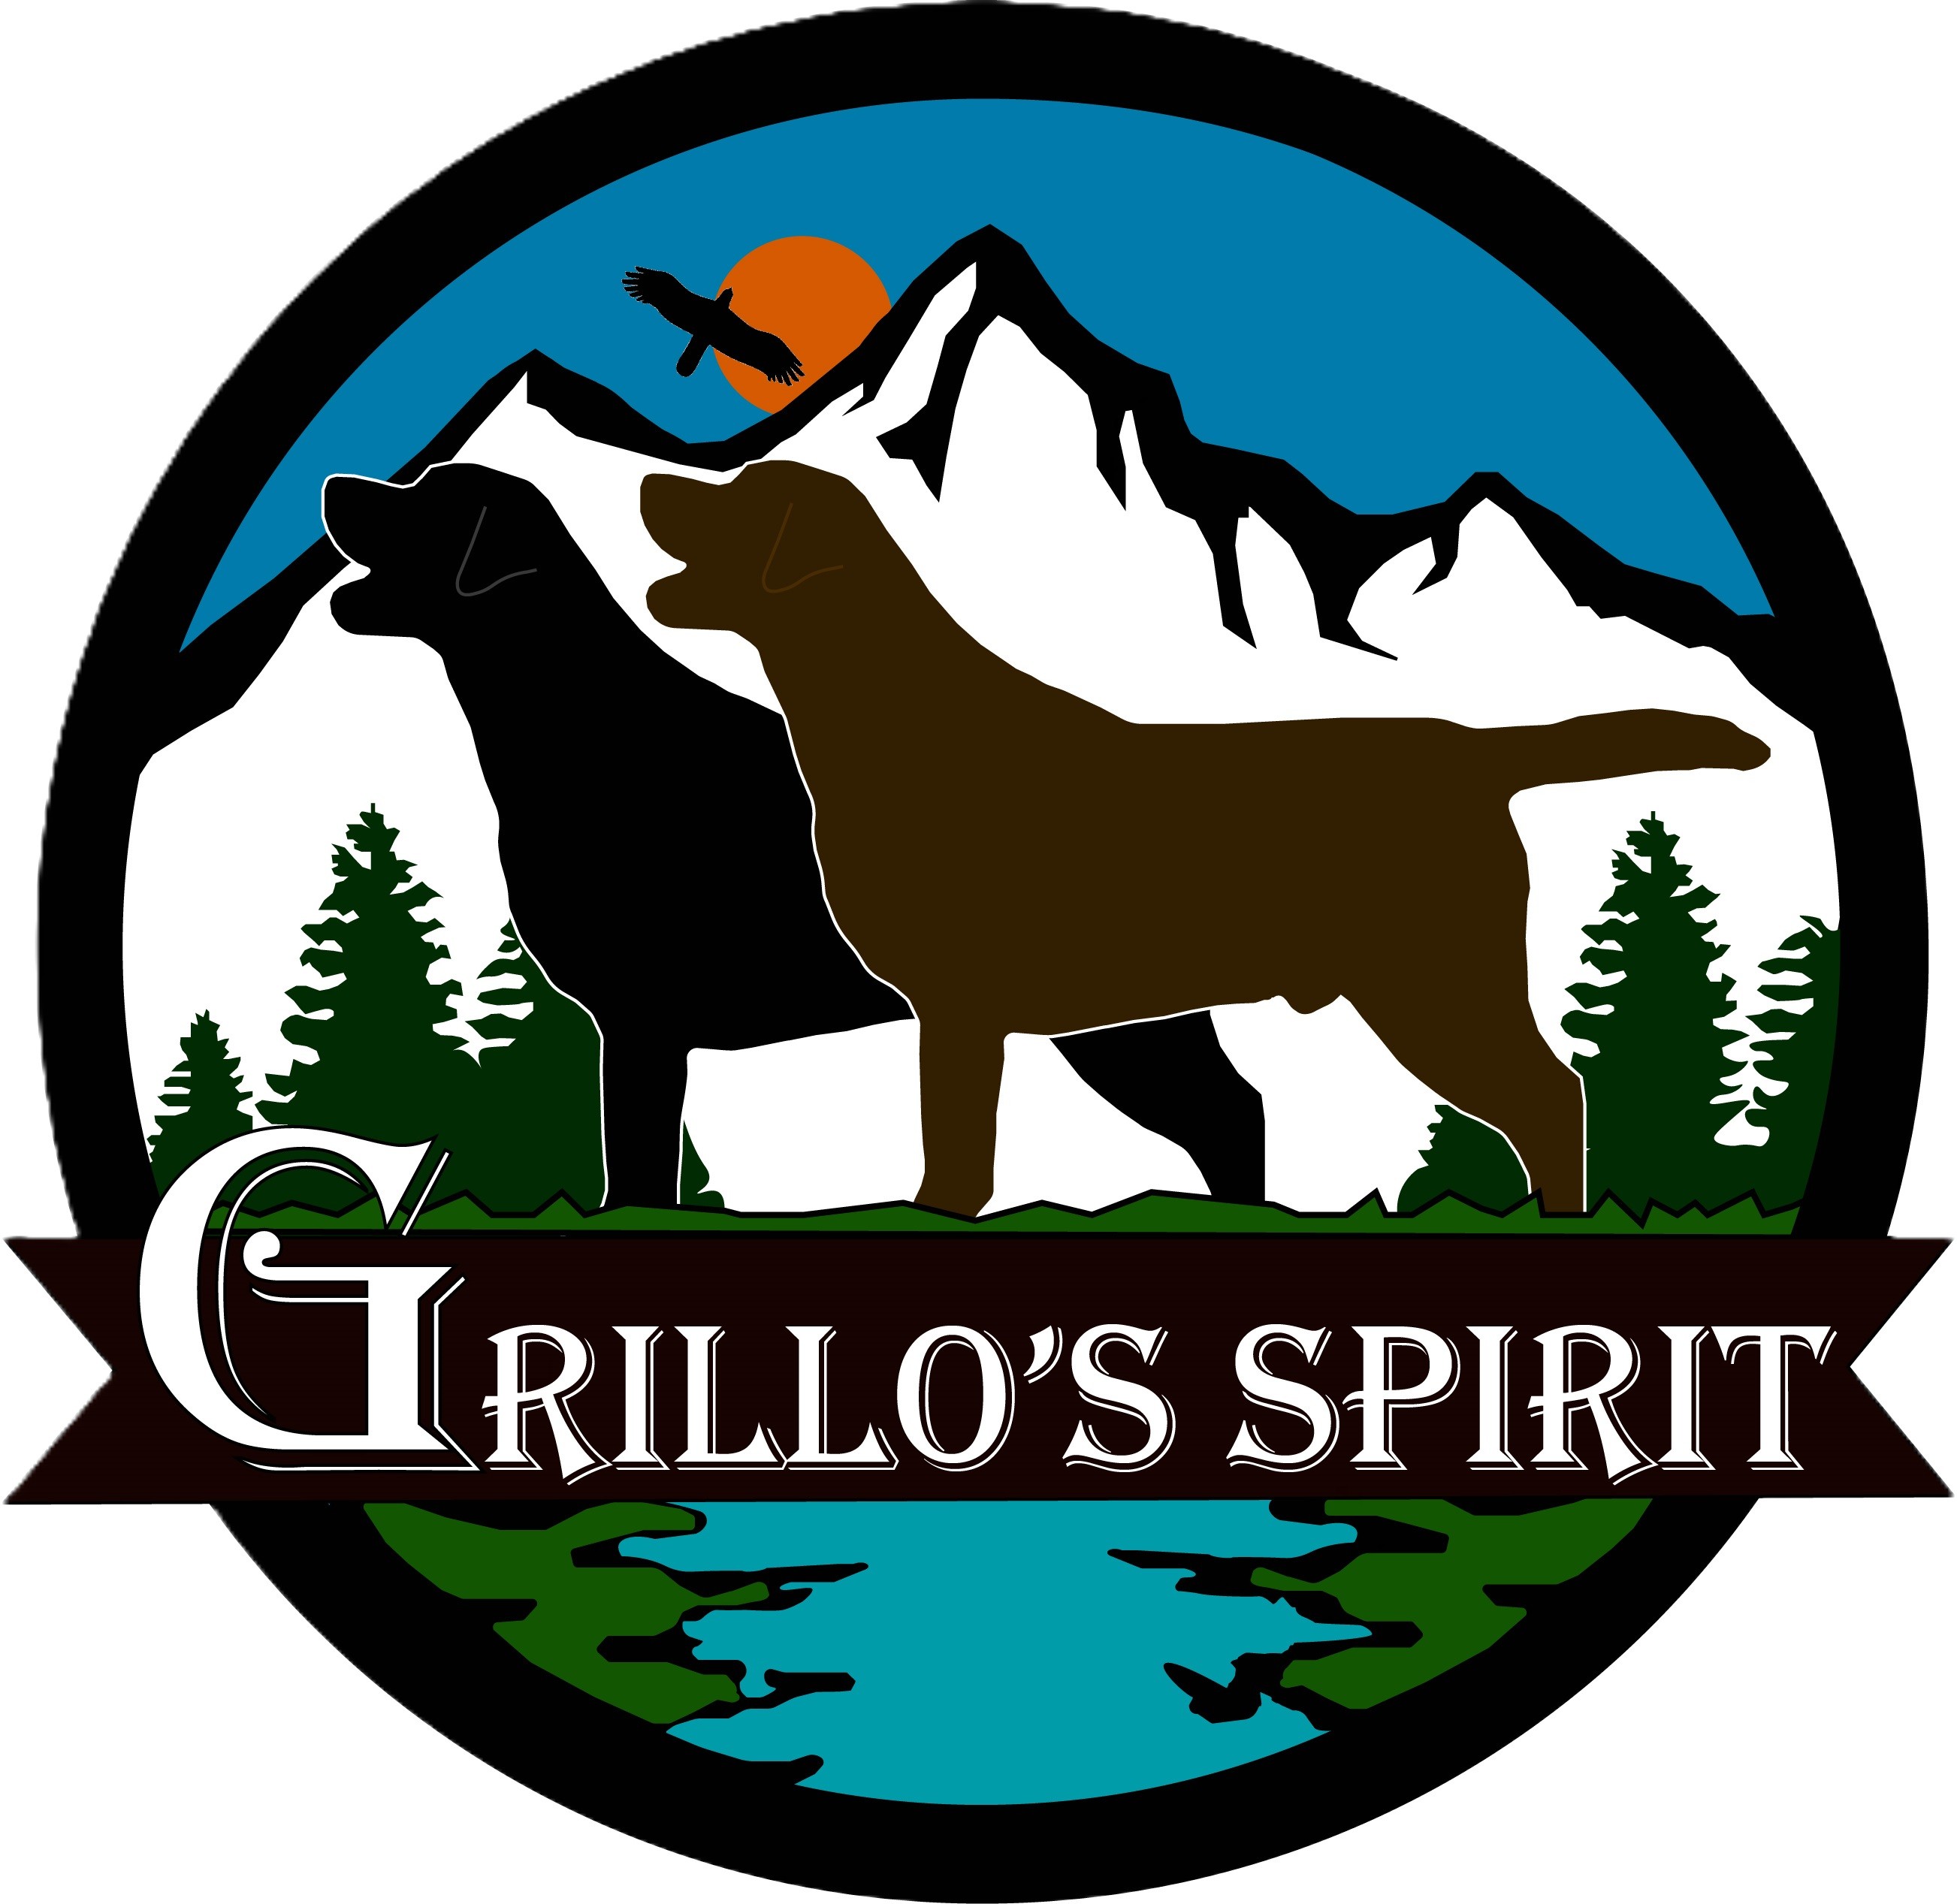 Grillo's Spirit